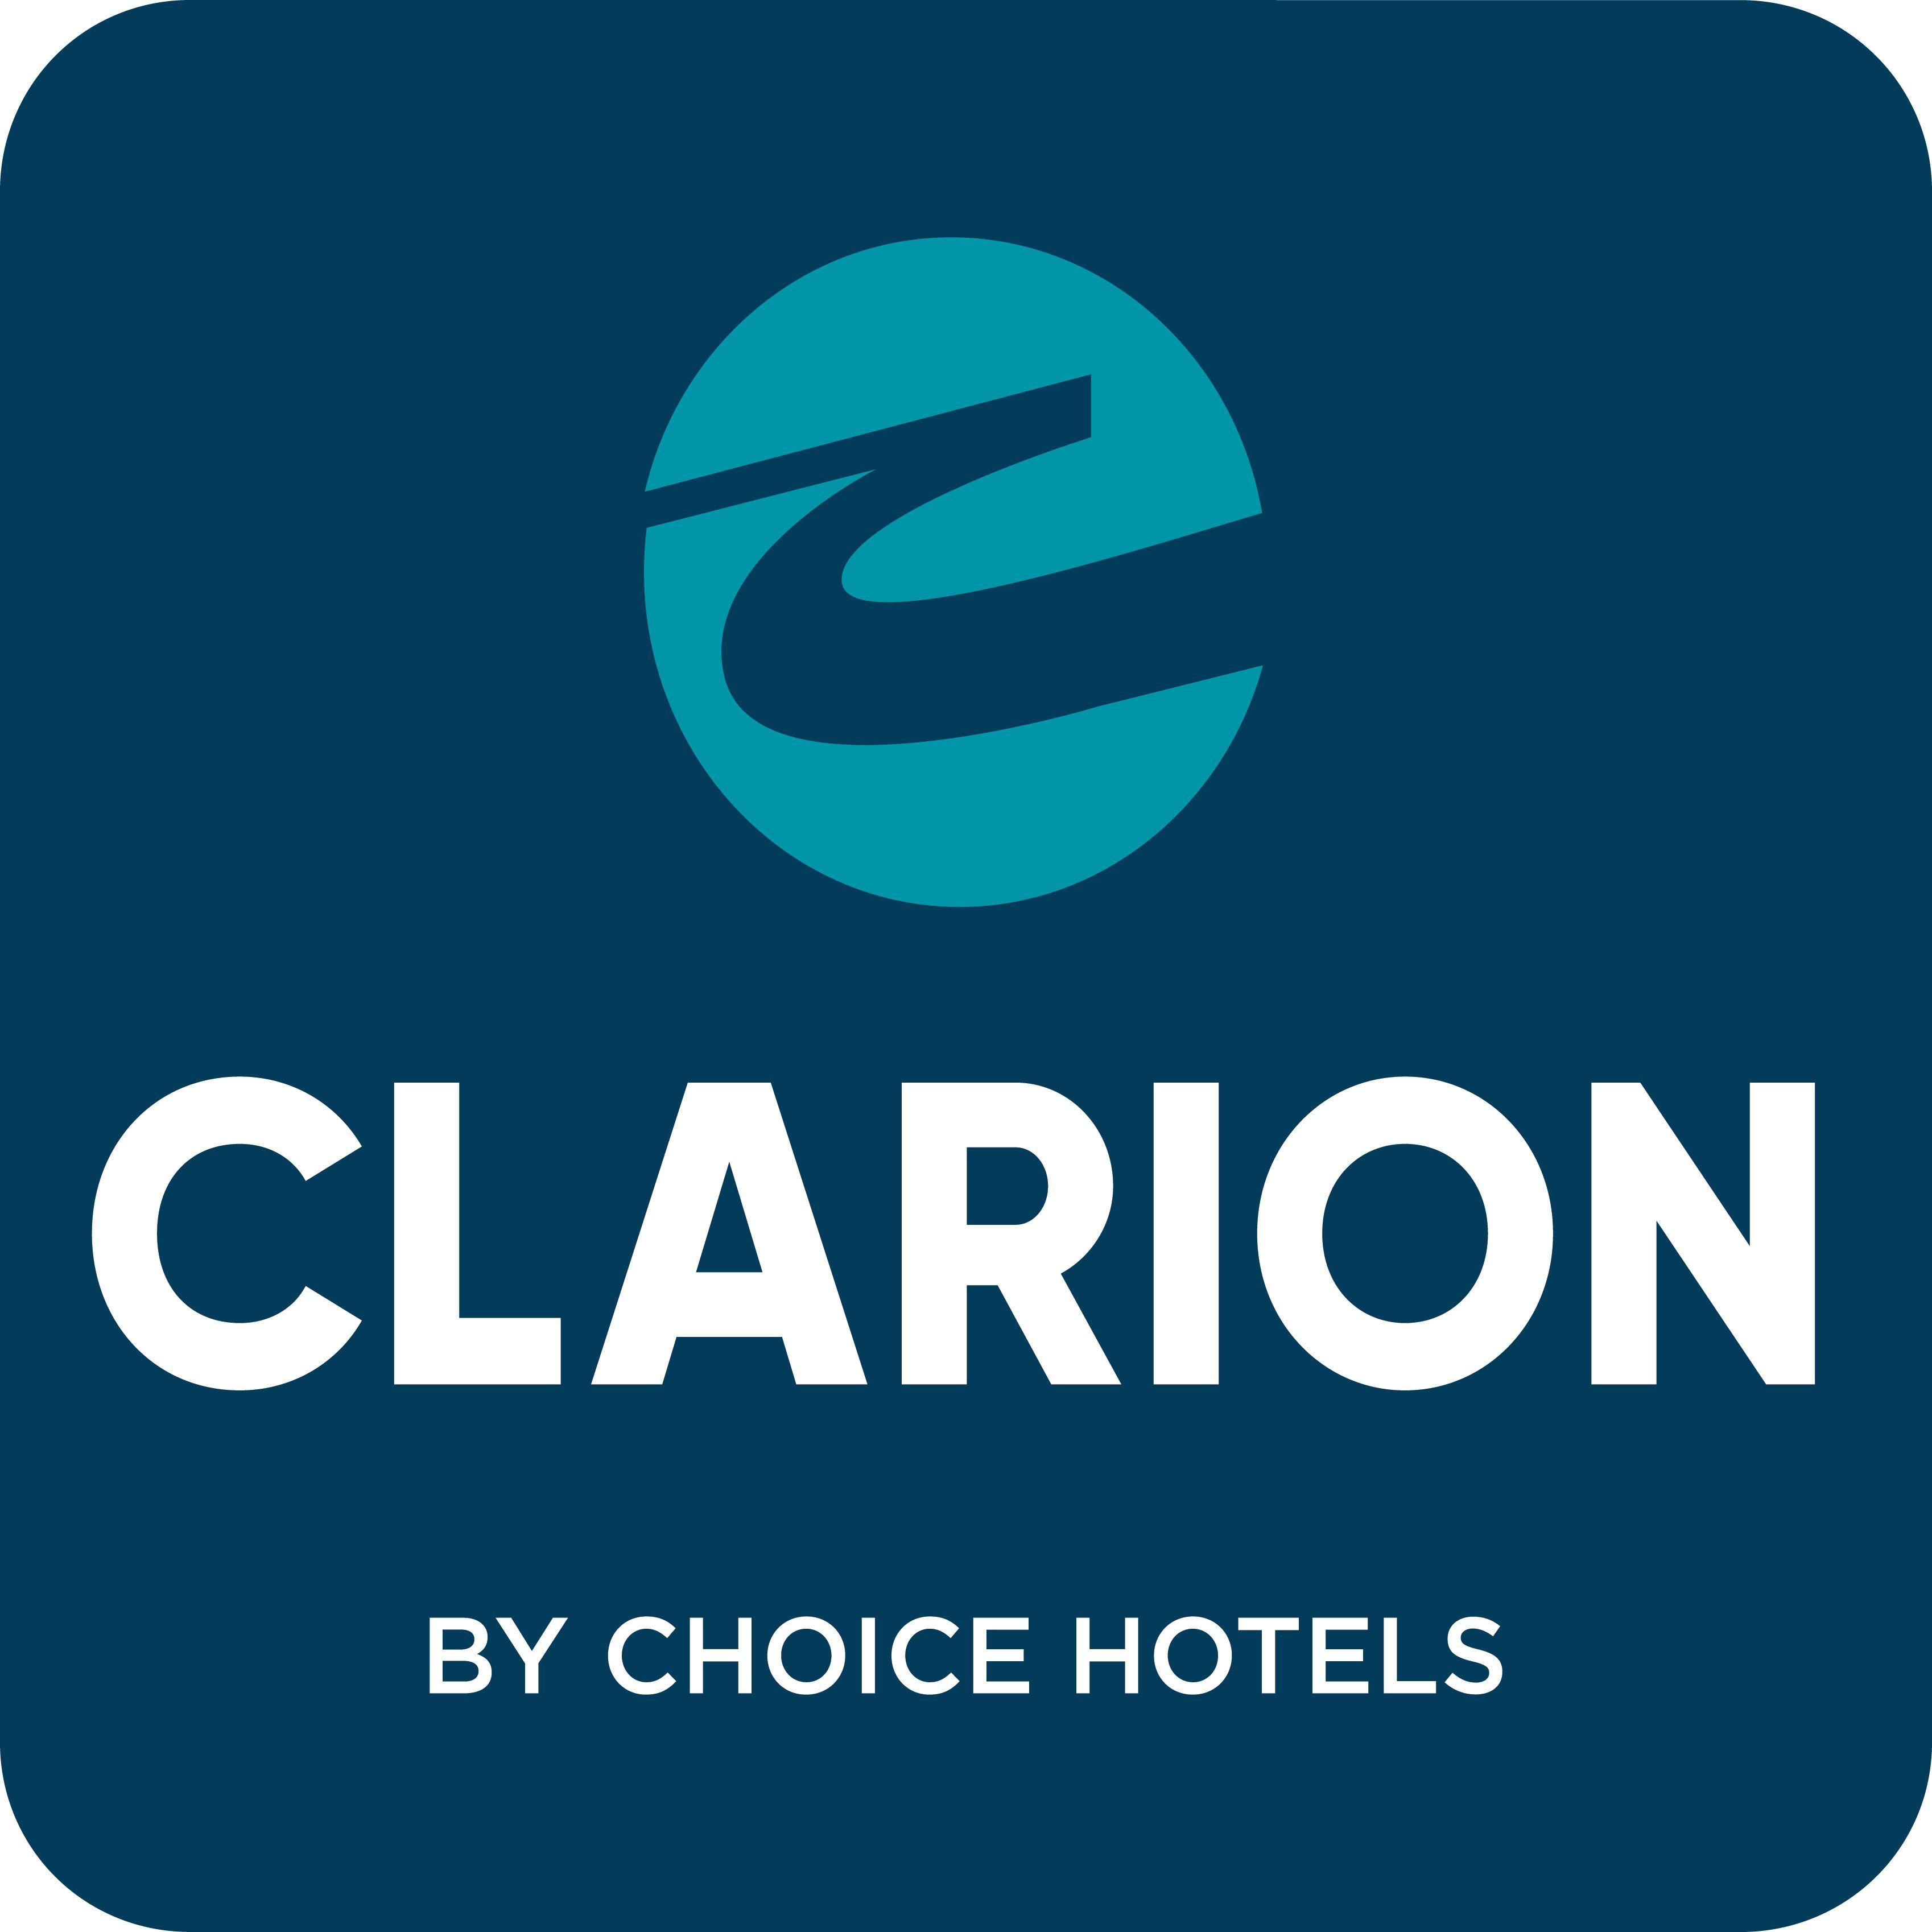 Clarion Logo - Choice Hotels International Press Kit